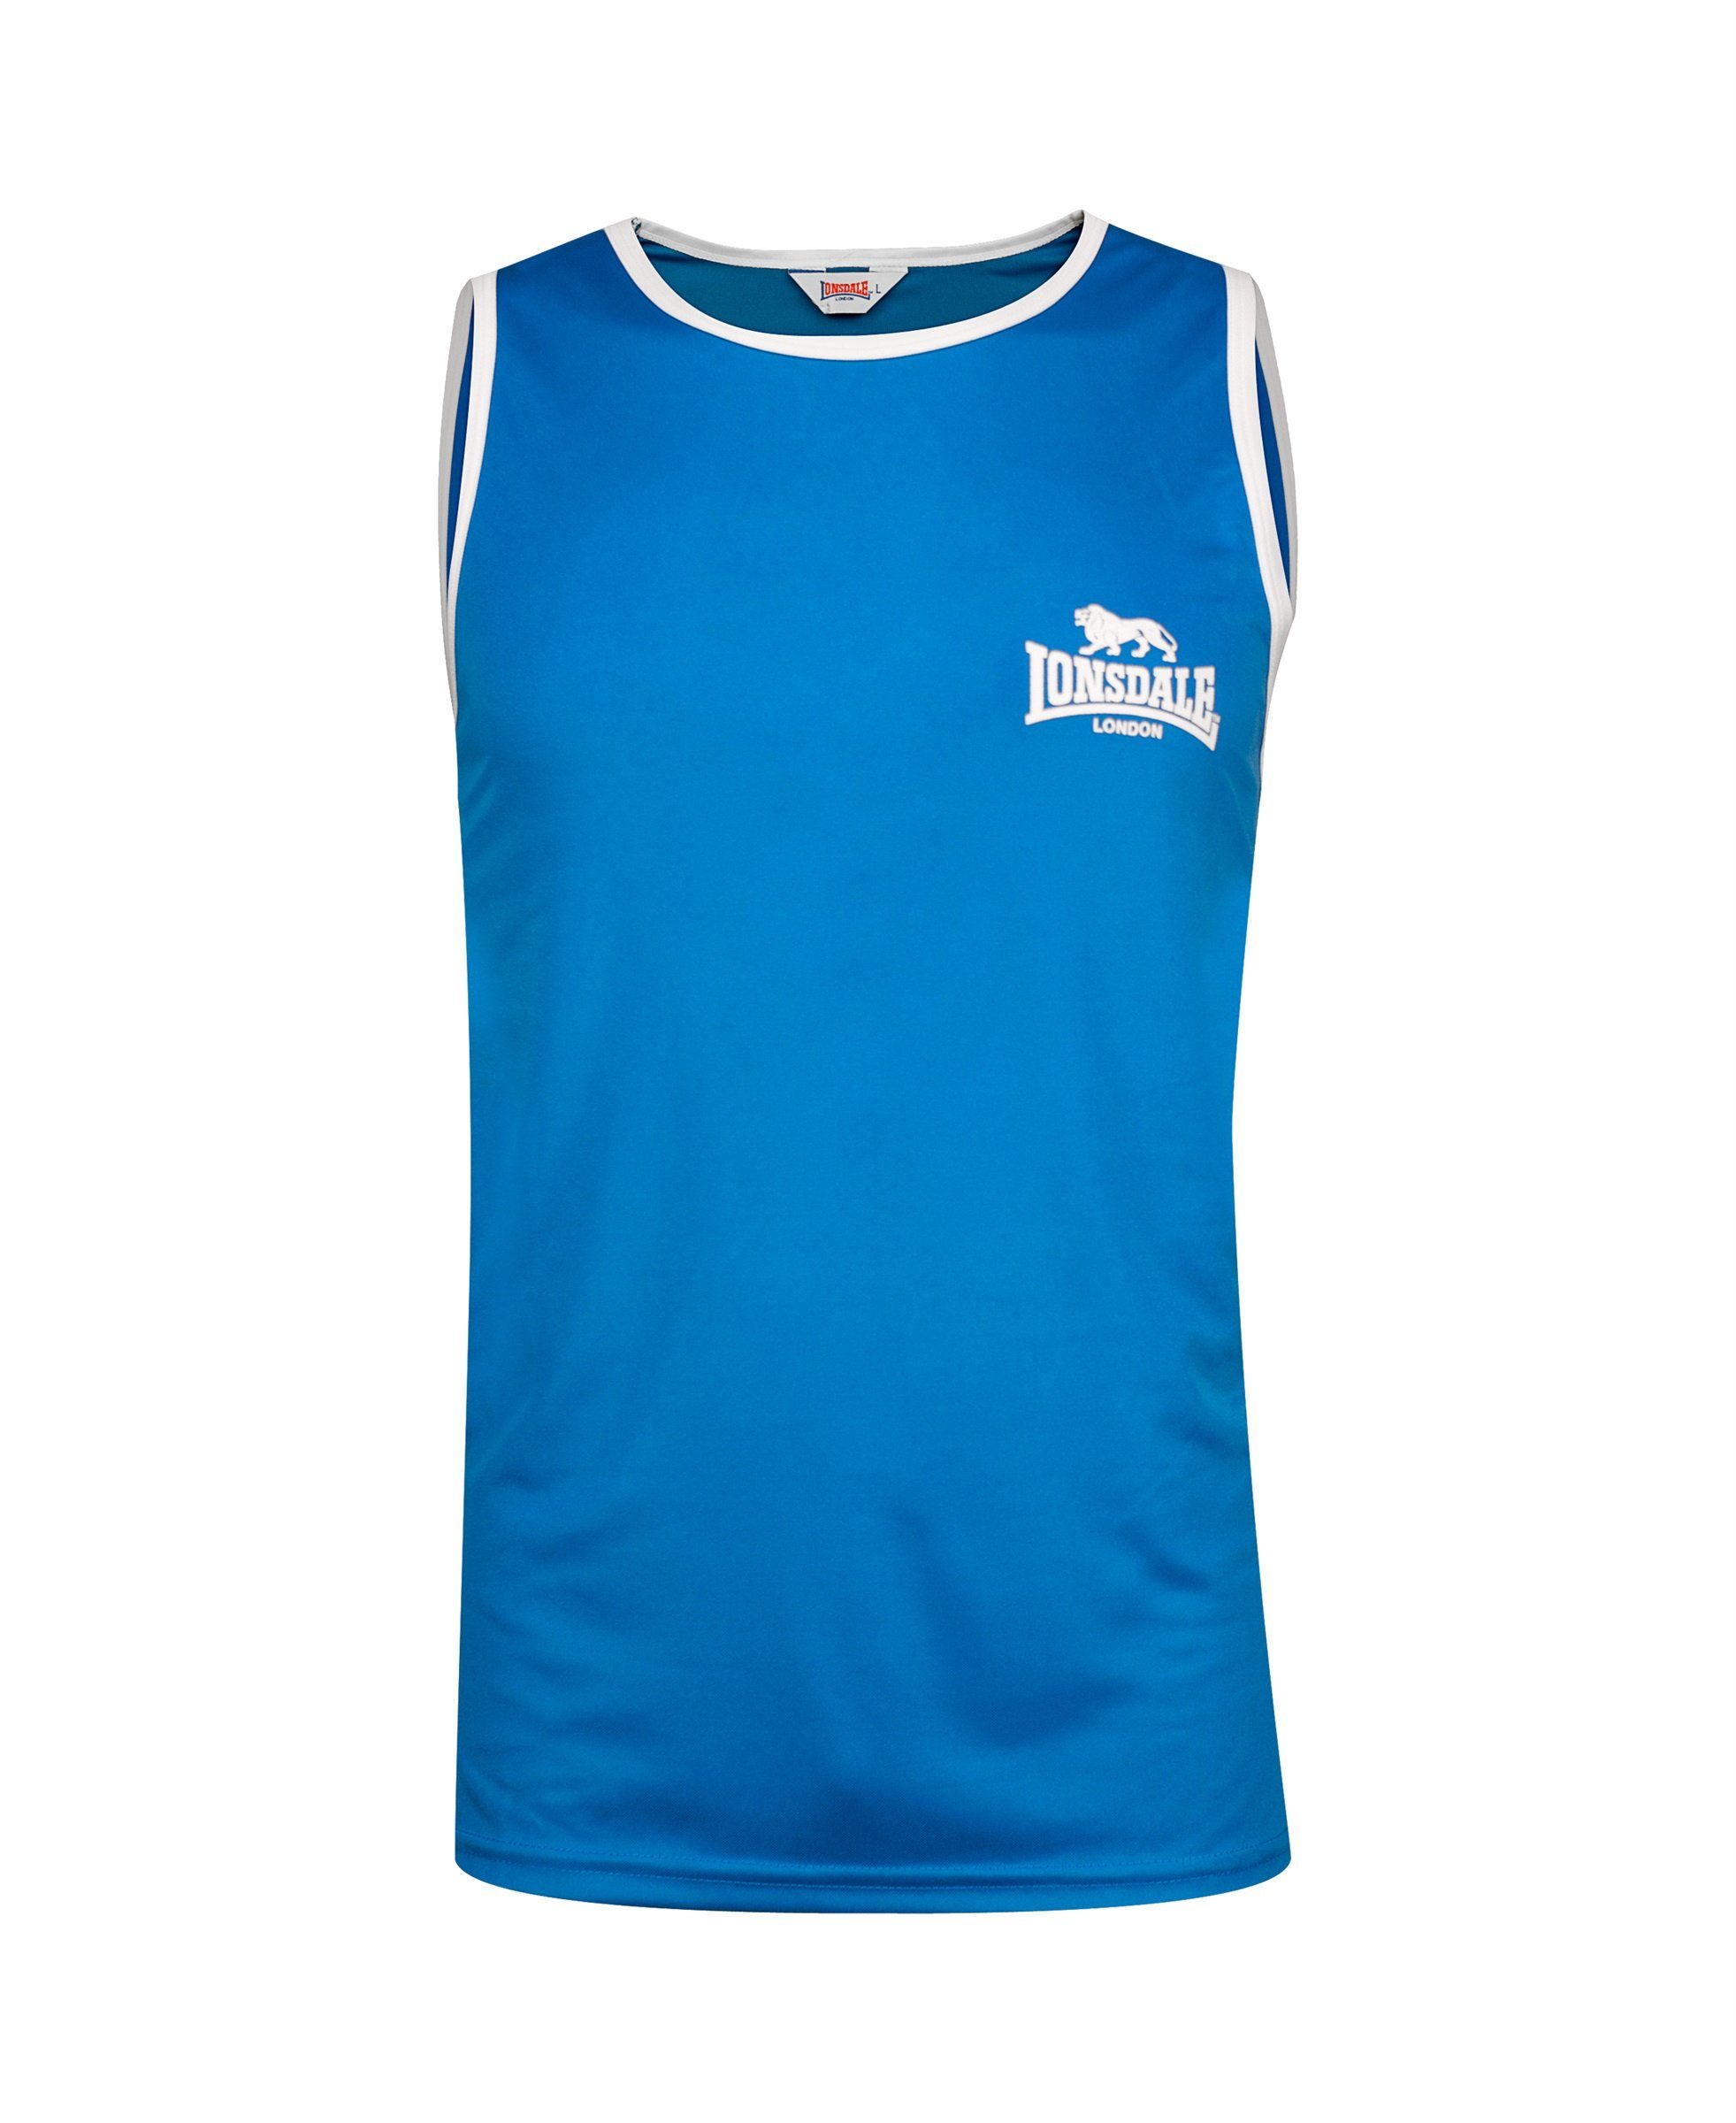 Lonsdale Sporttop Amateur royal blue Herren T-Shirt Erwachsene Singlet Lonsdale